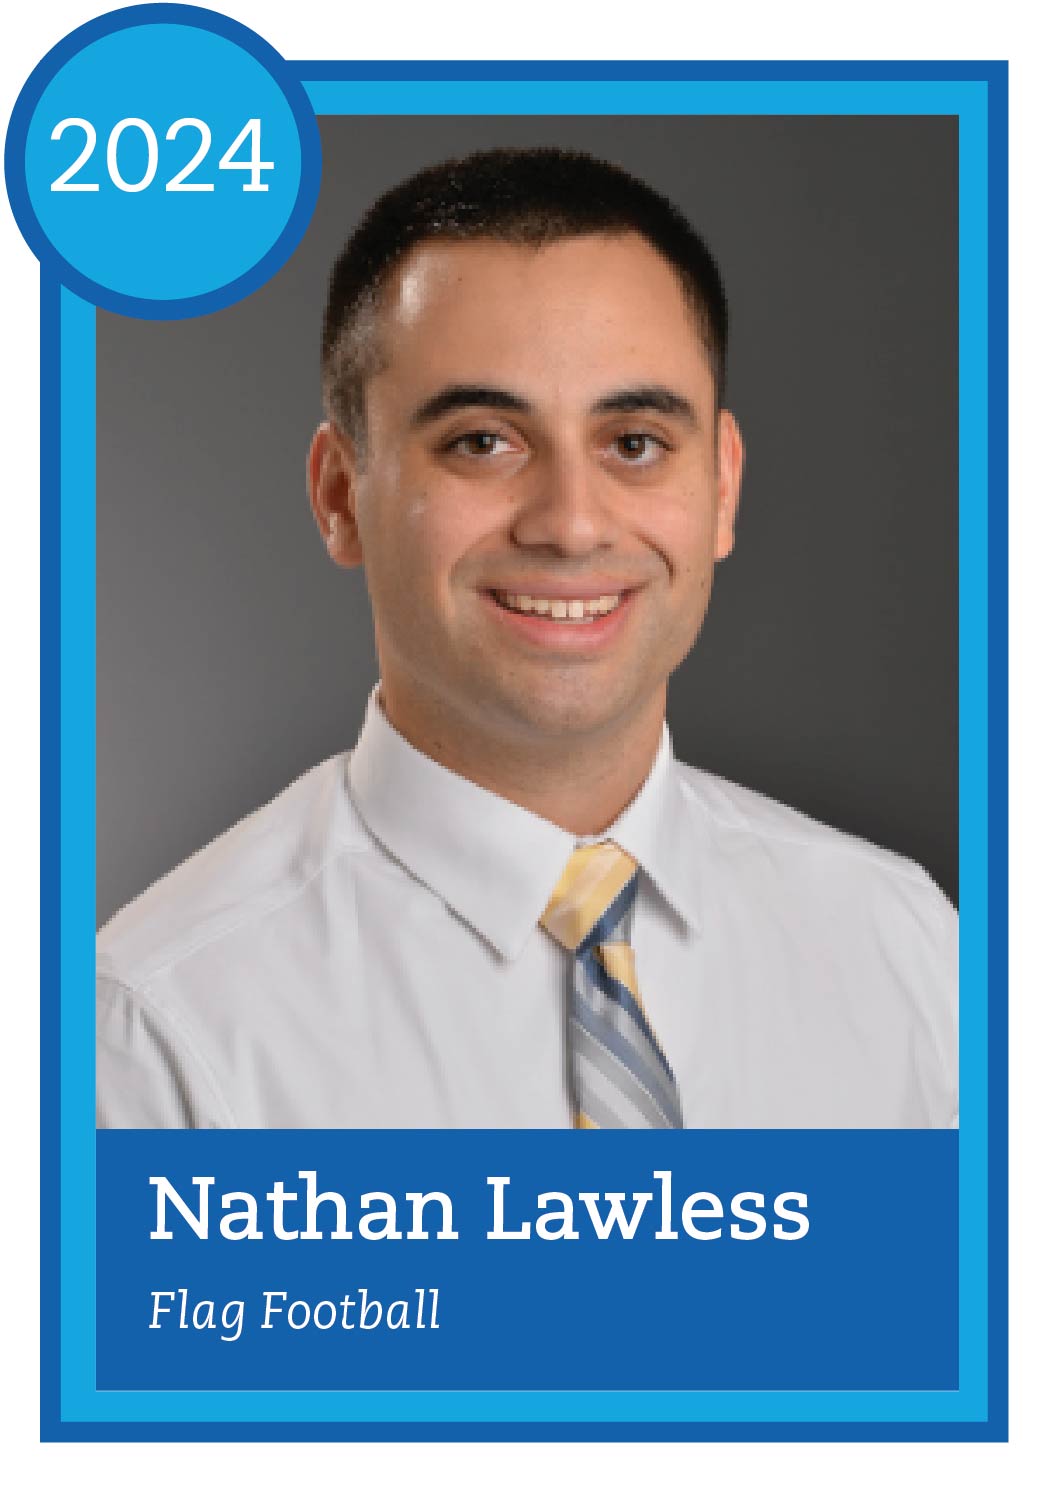 Baseball card design with headshot of Nathan Lawless and text "Nathan Lawless, flag football"